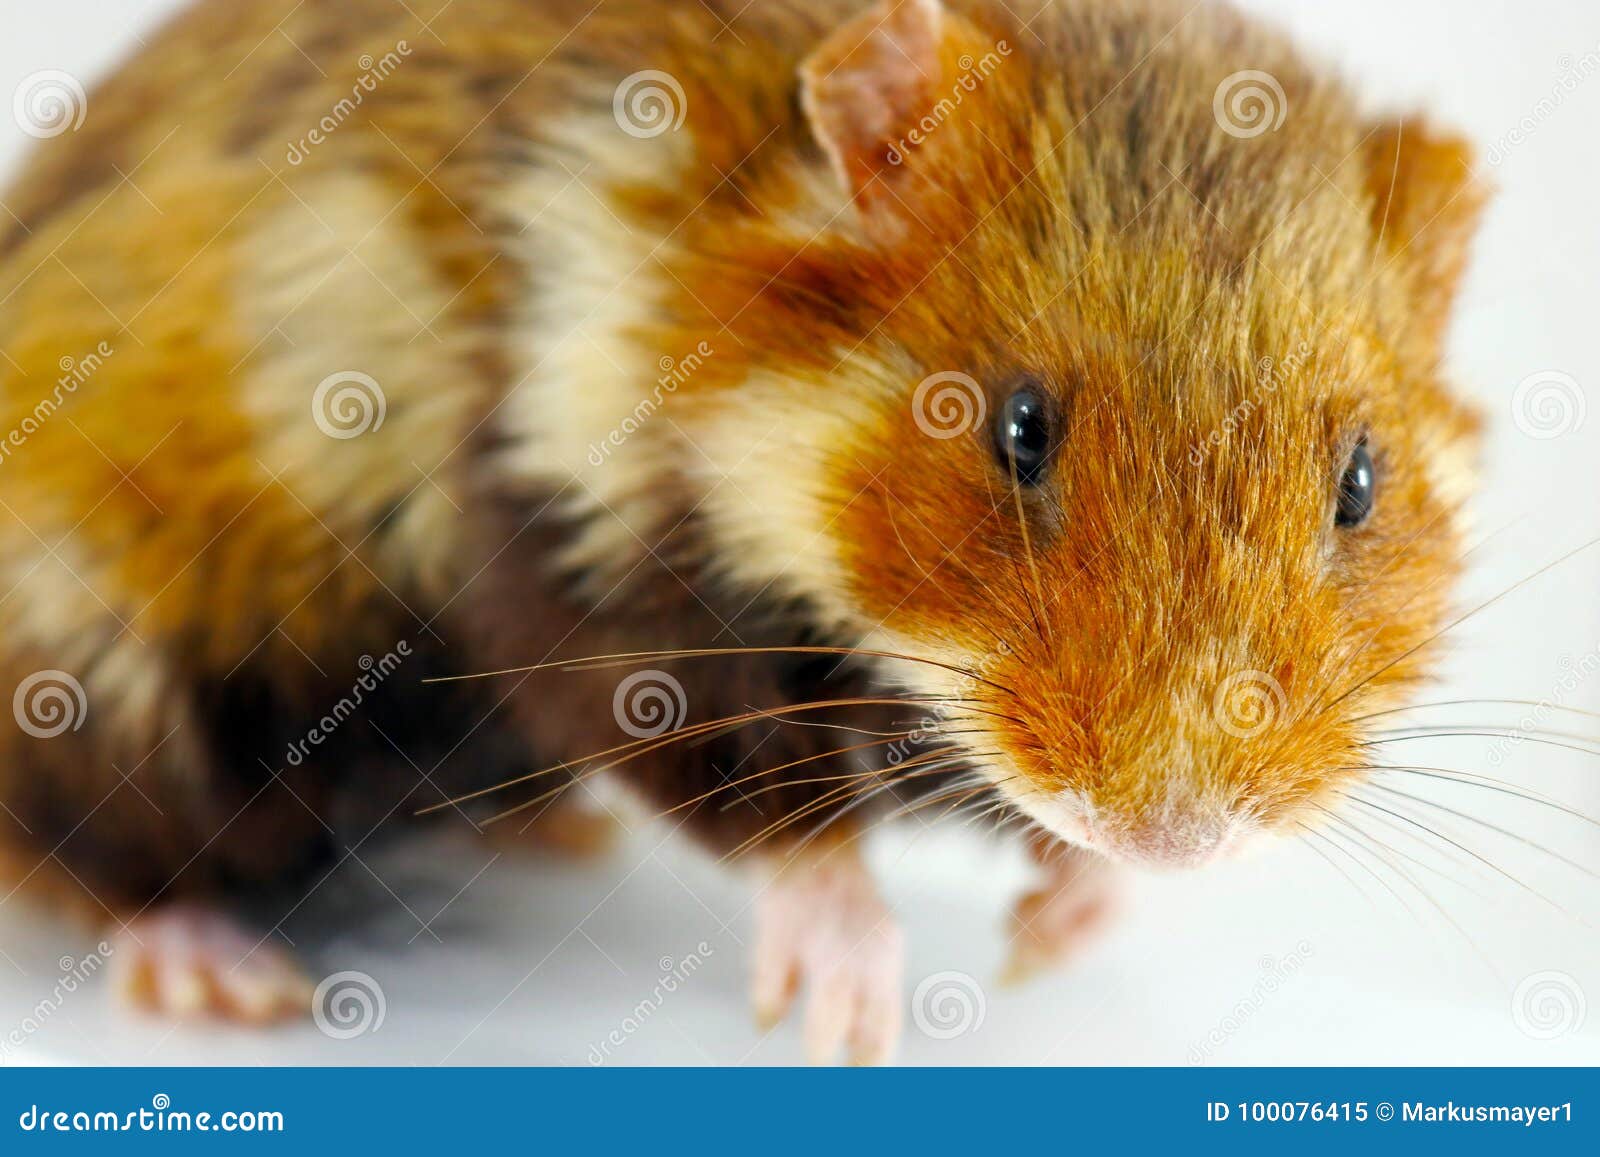 taxidermy hamster